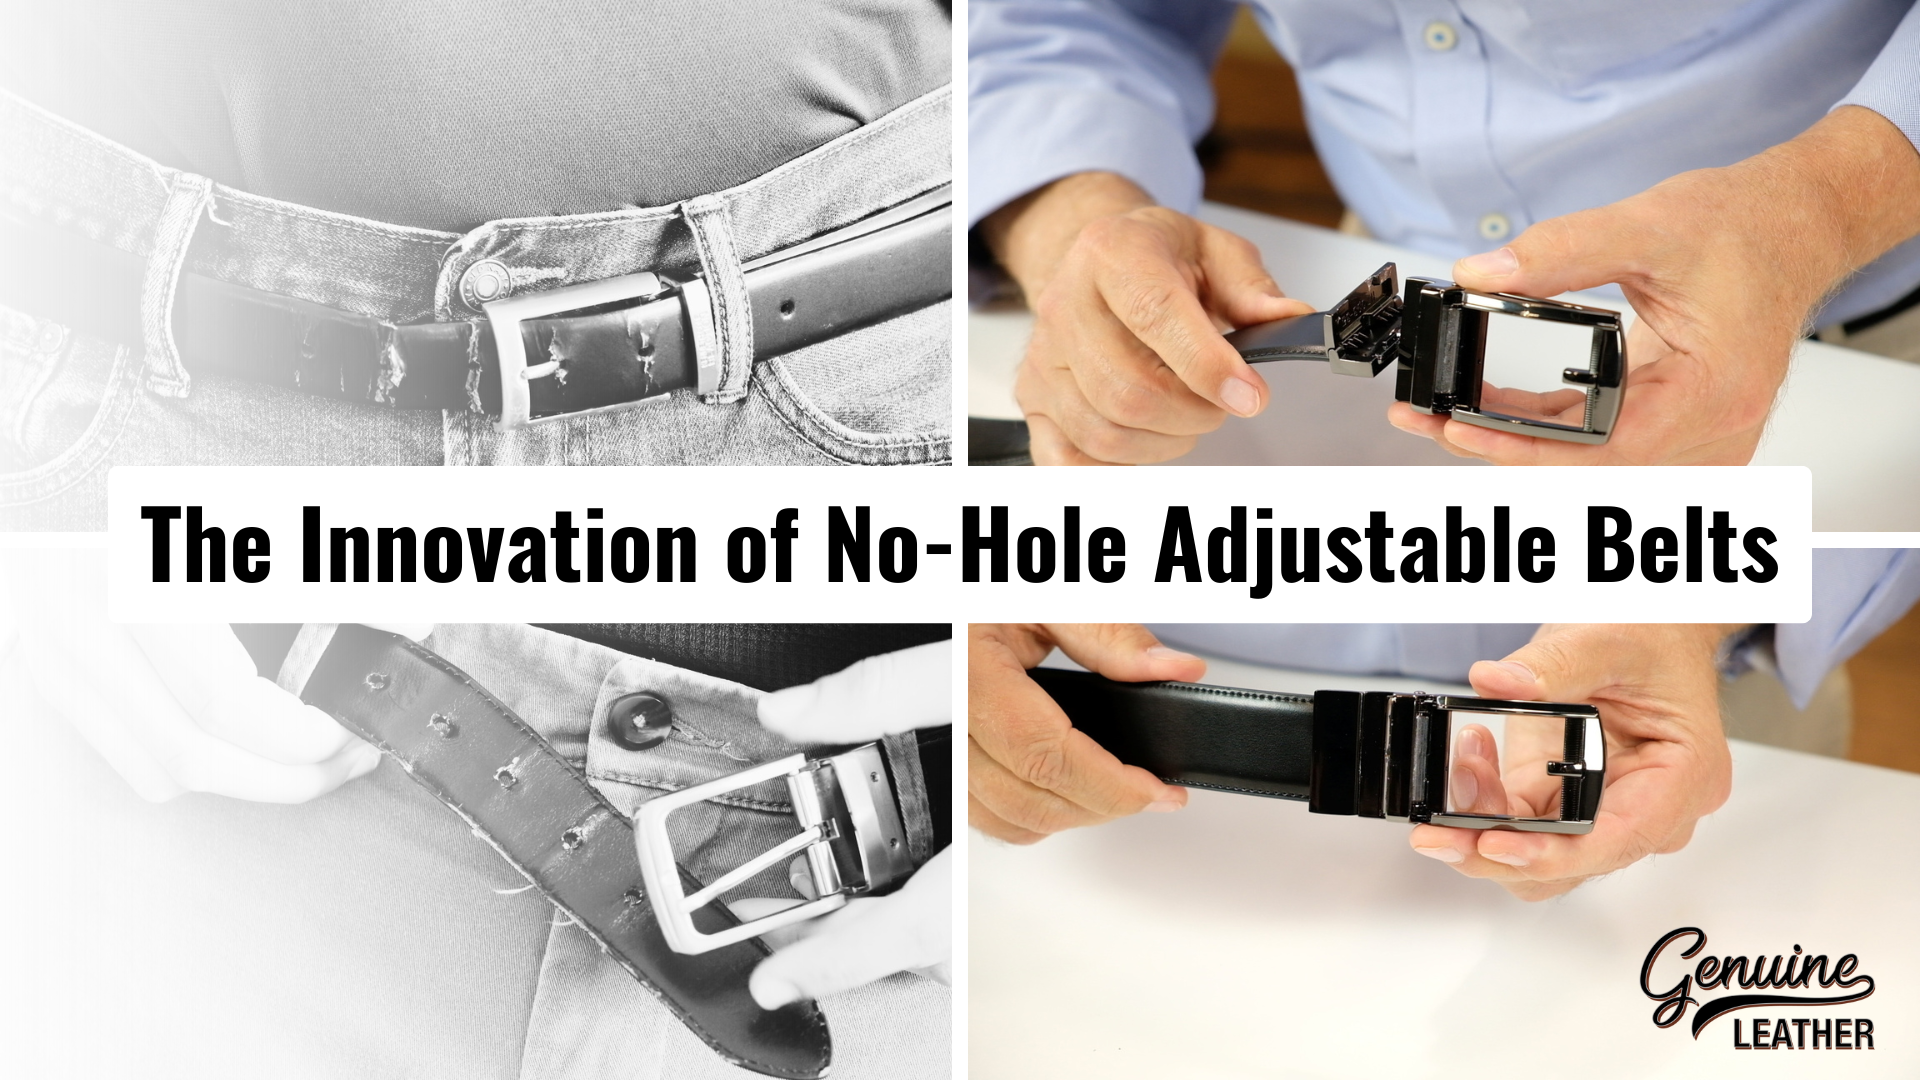 The Innovation of No-Hole Adjustable Belts